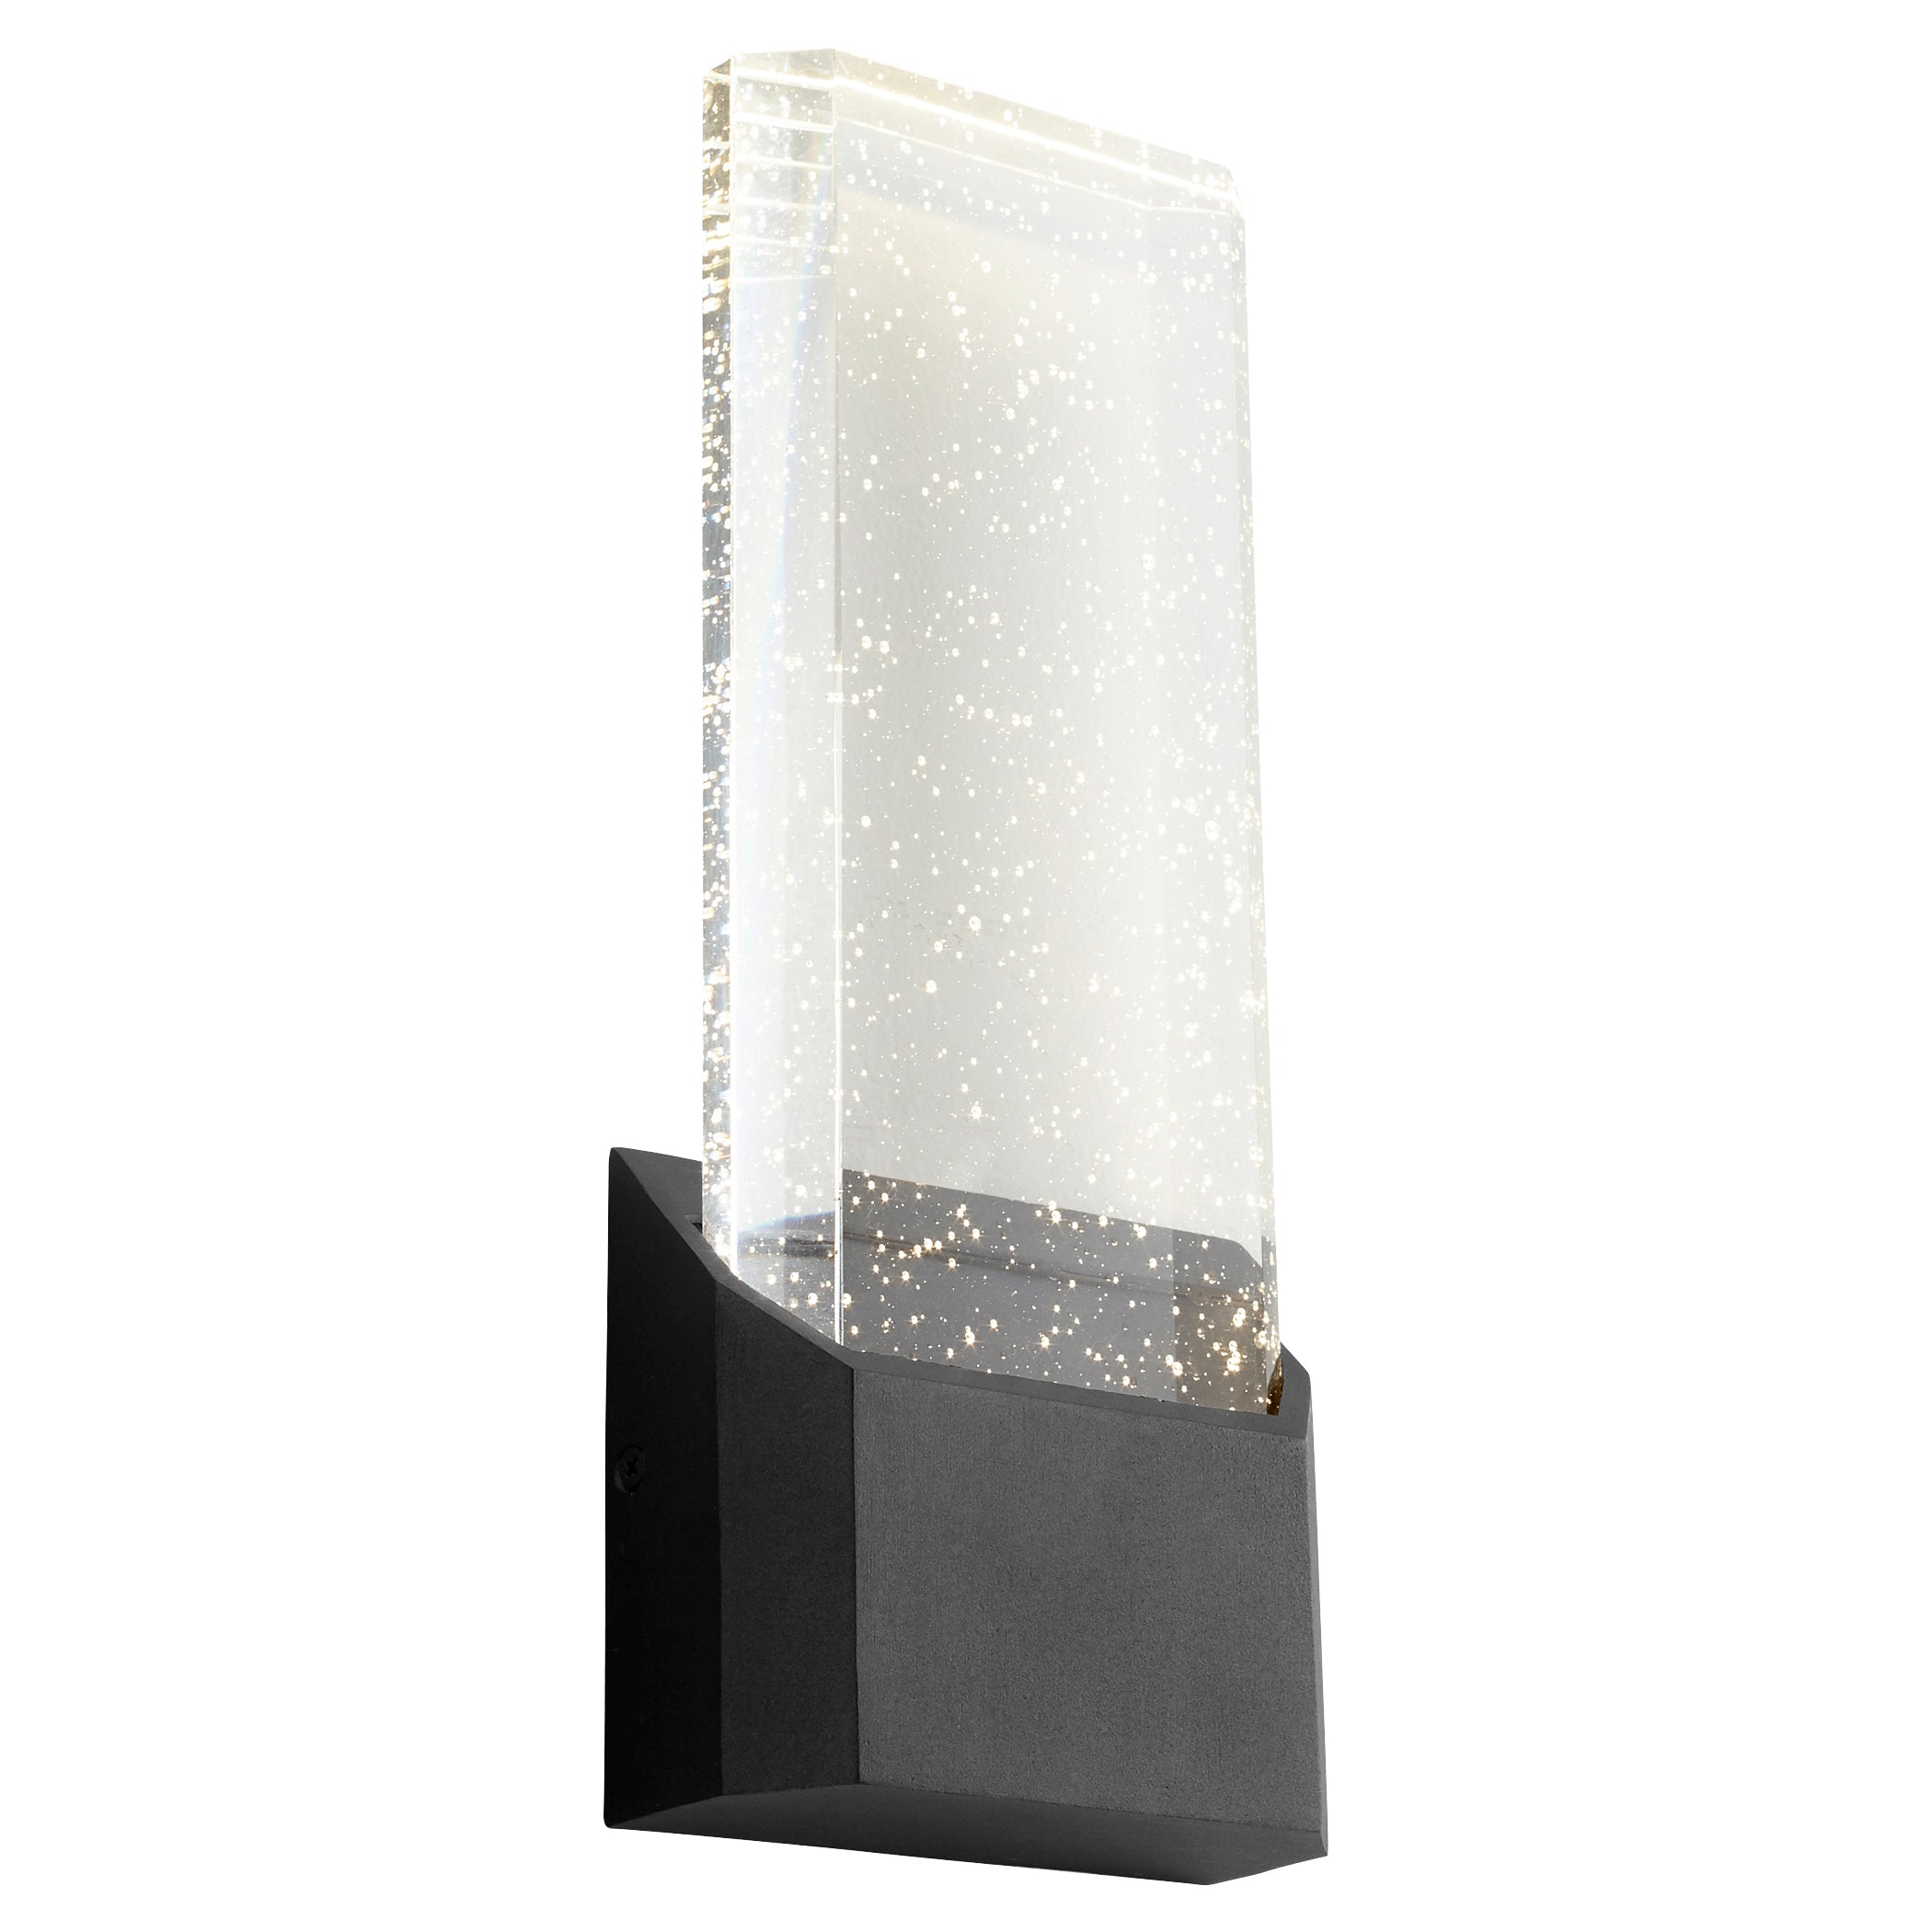 Oxygen Esprit 3-755-15 Outdoor Wall Sconce Light - Black